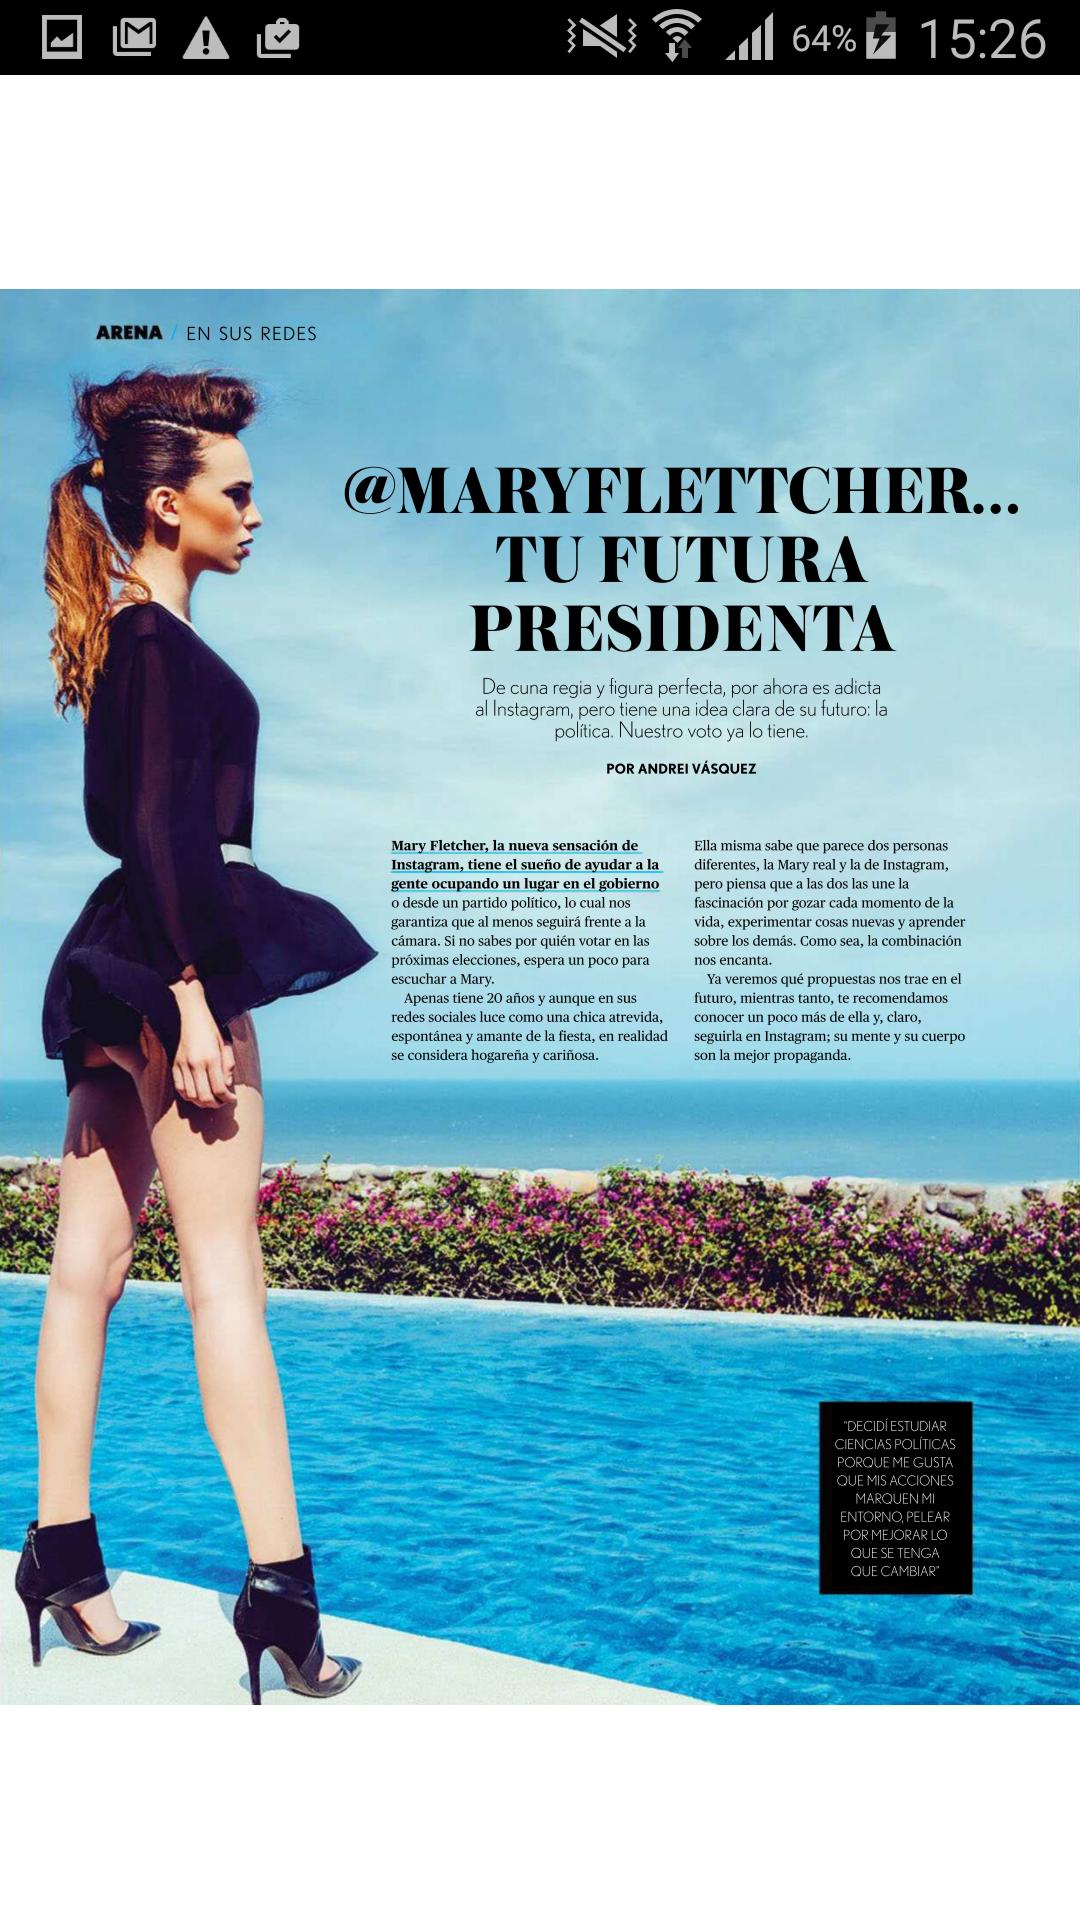 Maxim Mexico Revista